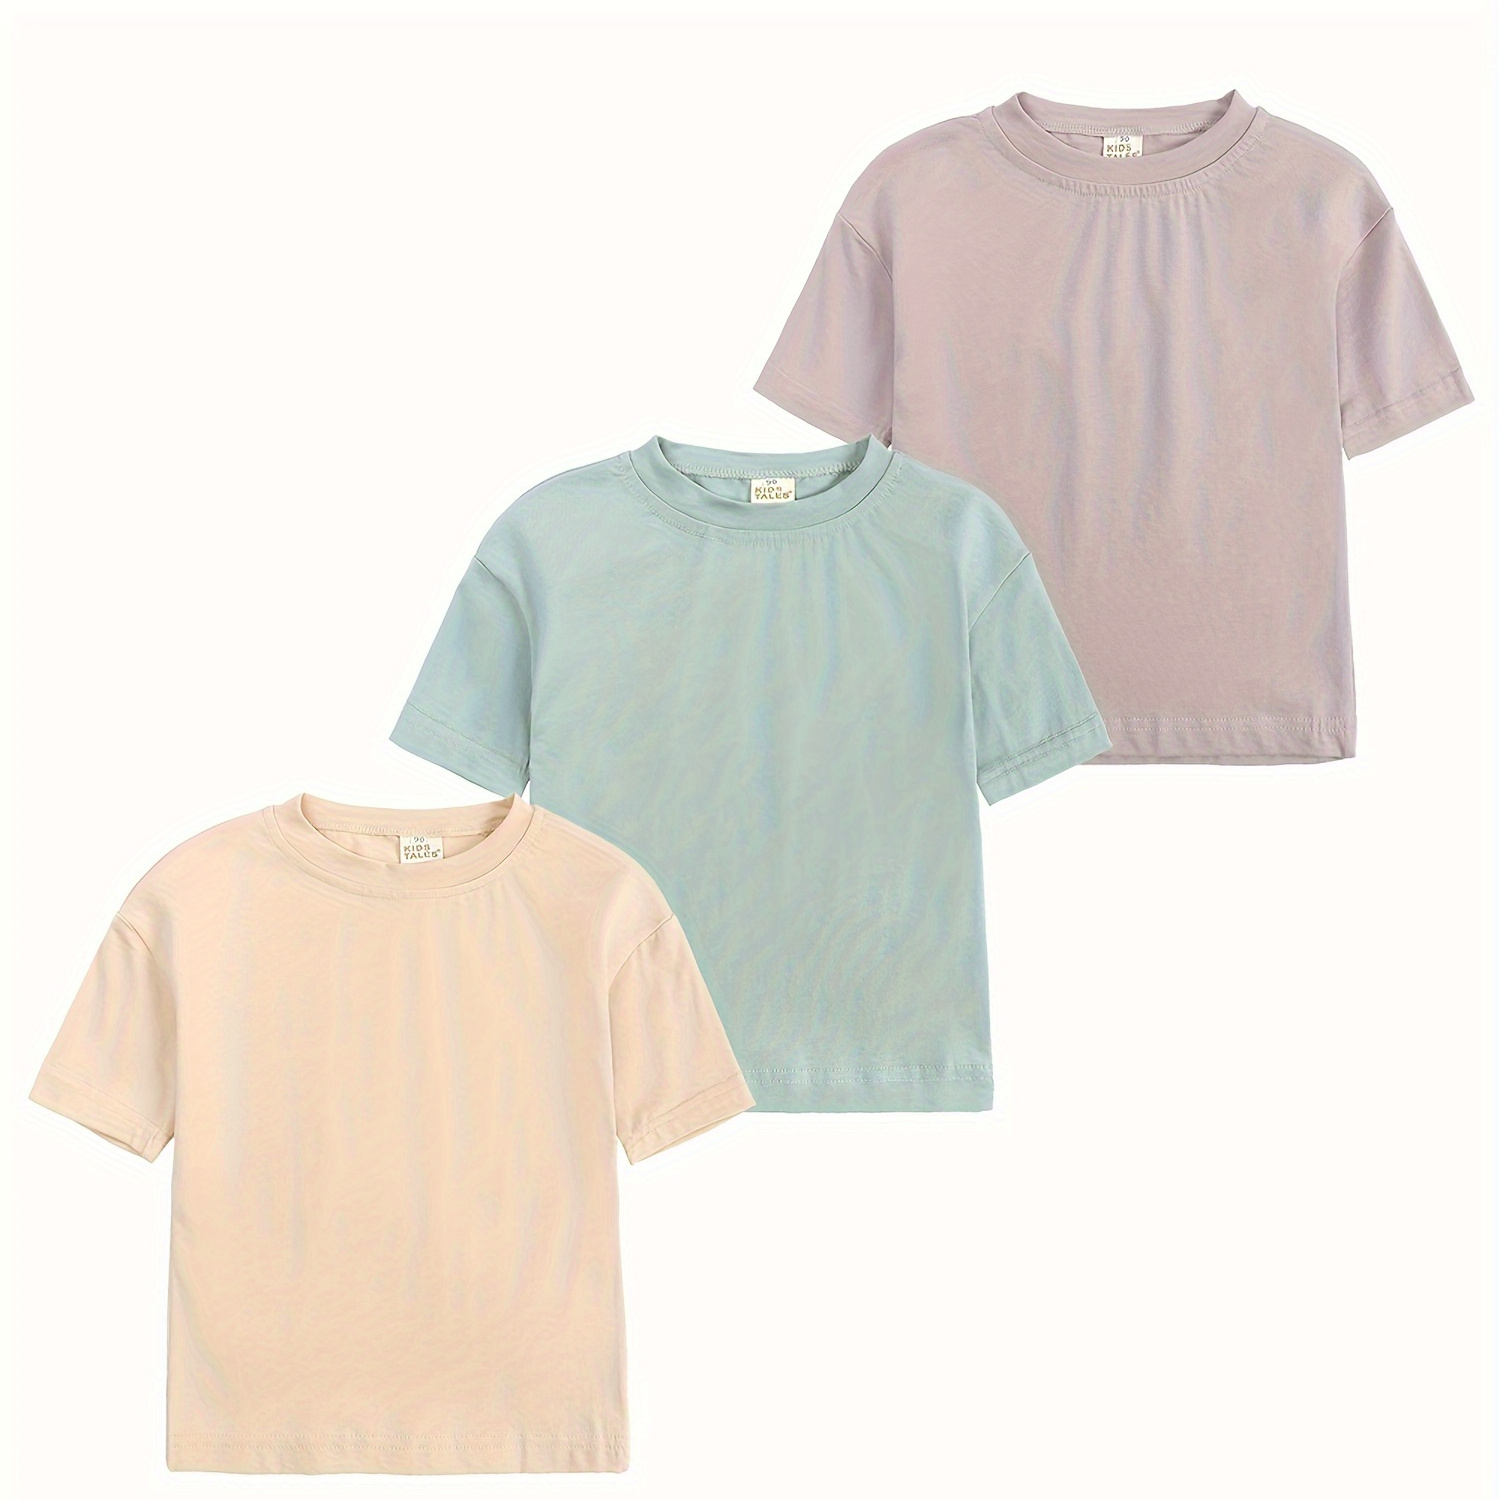 

3-pack Little Boys Girls Cotton Short Sleeve T-shirt Toddler Summer Tee Tops Solid Color Crewneck Shirt